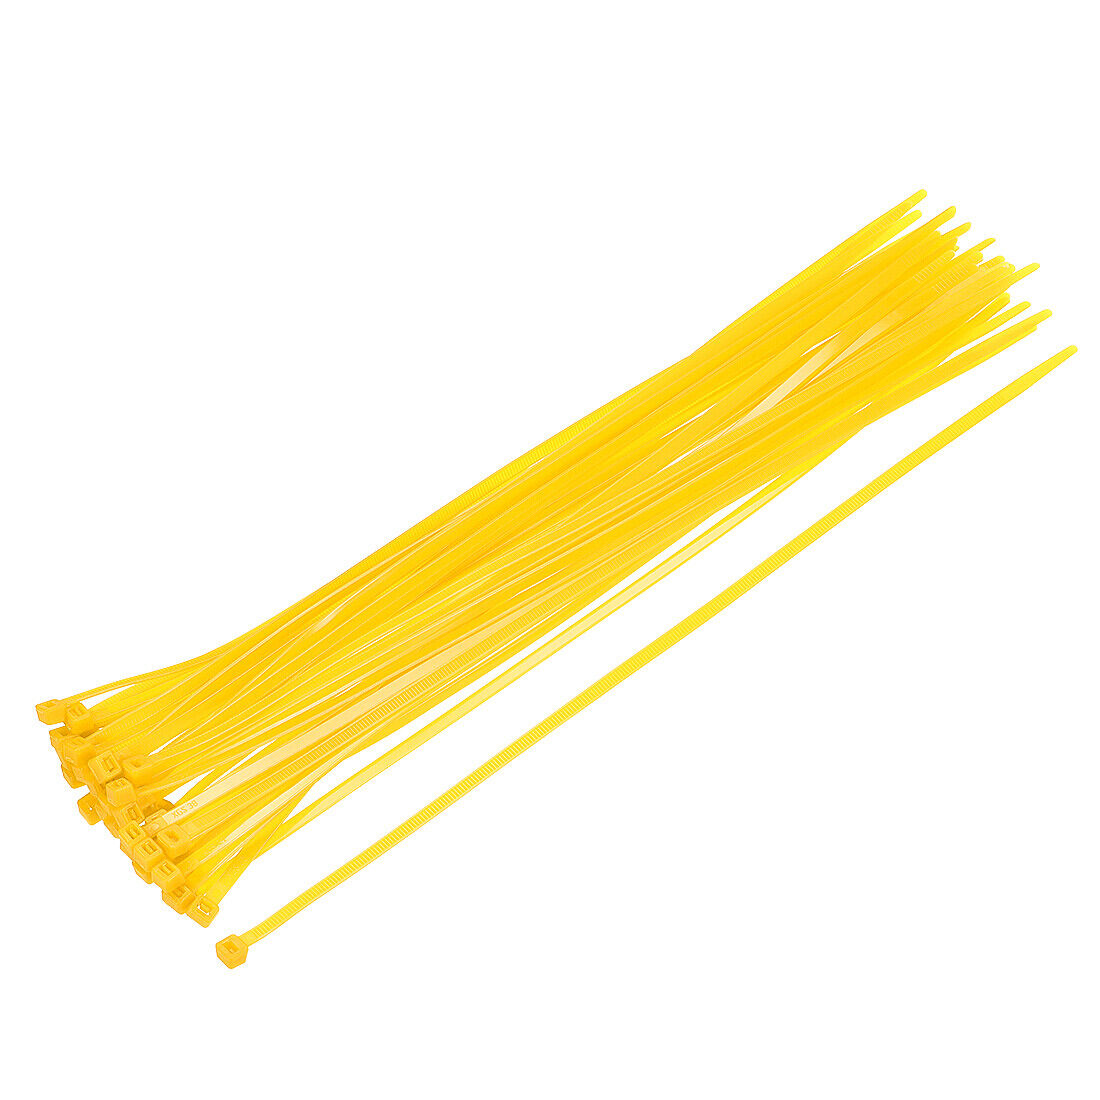 Cable Zip Ties 350mmx4.8mm Self-locking Nylon Tie Wraps Yellow 100pcs